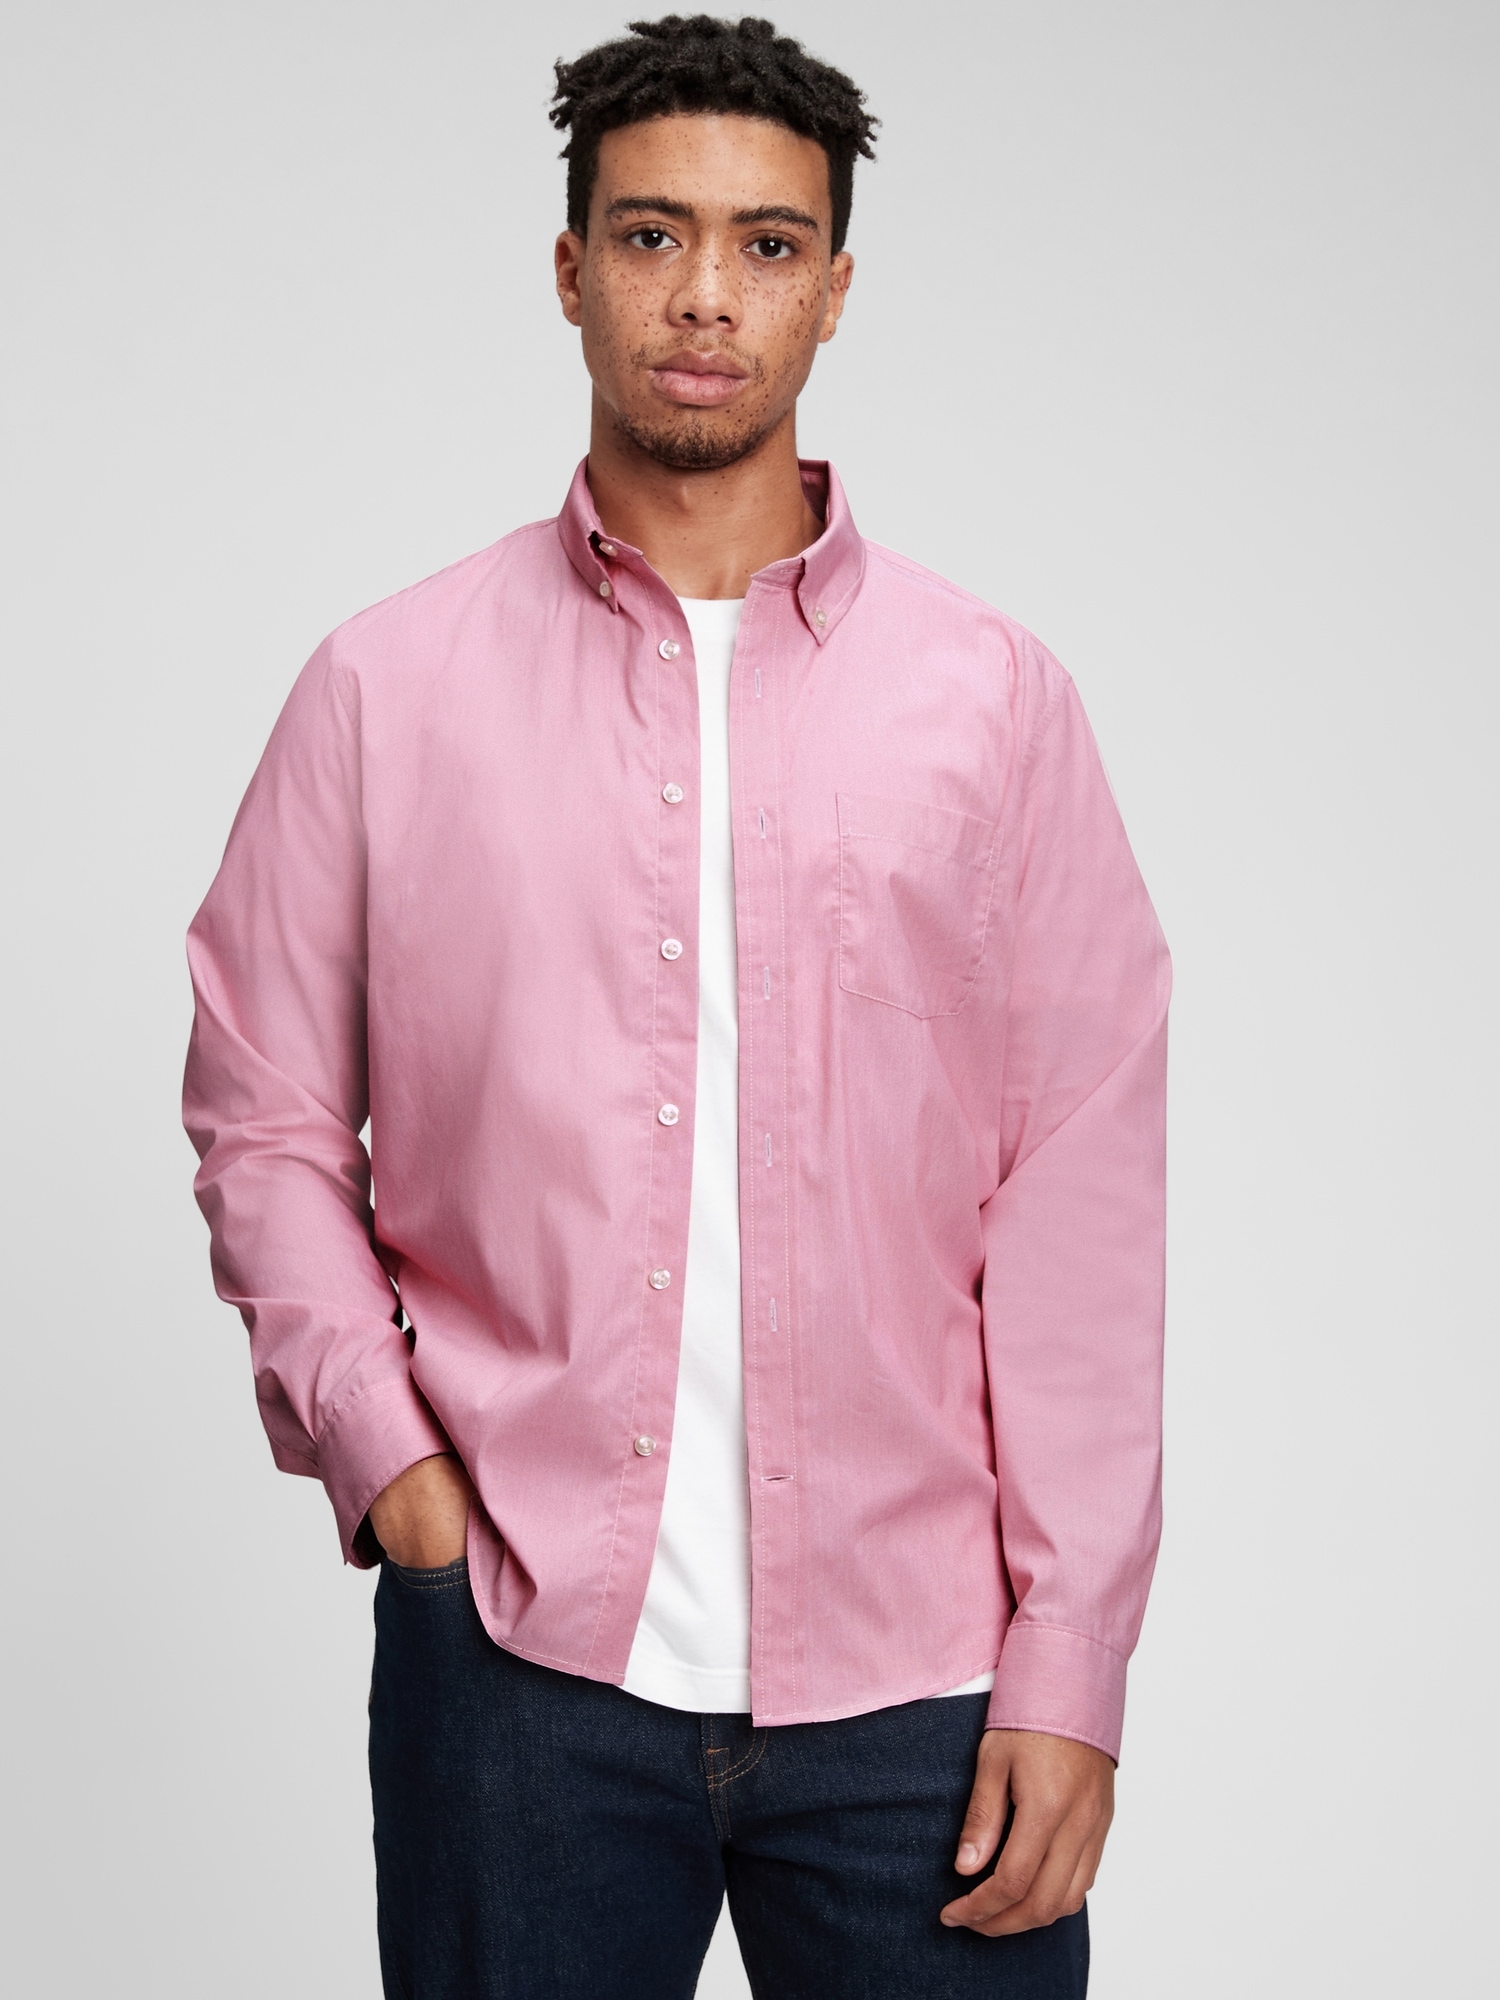 Gap All-day Poplin Shirt In Untucked Fit In Pink Standard